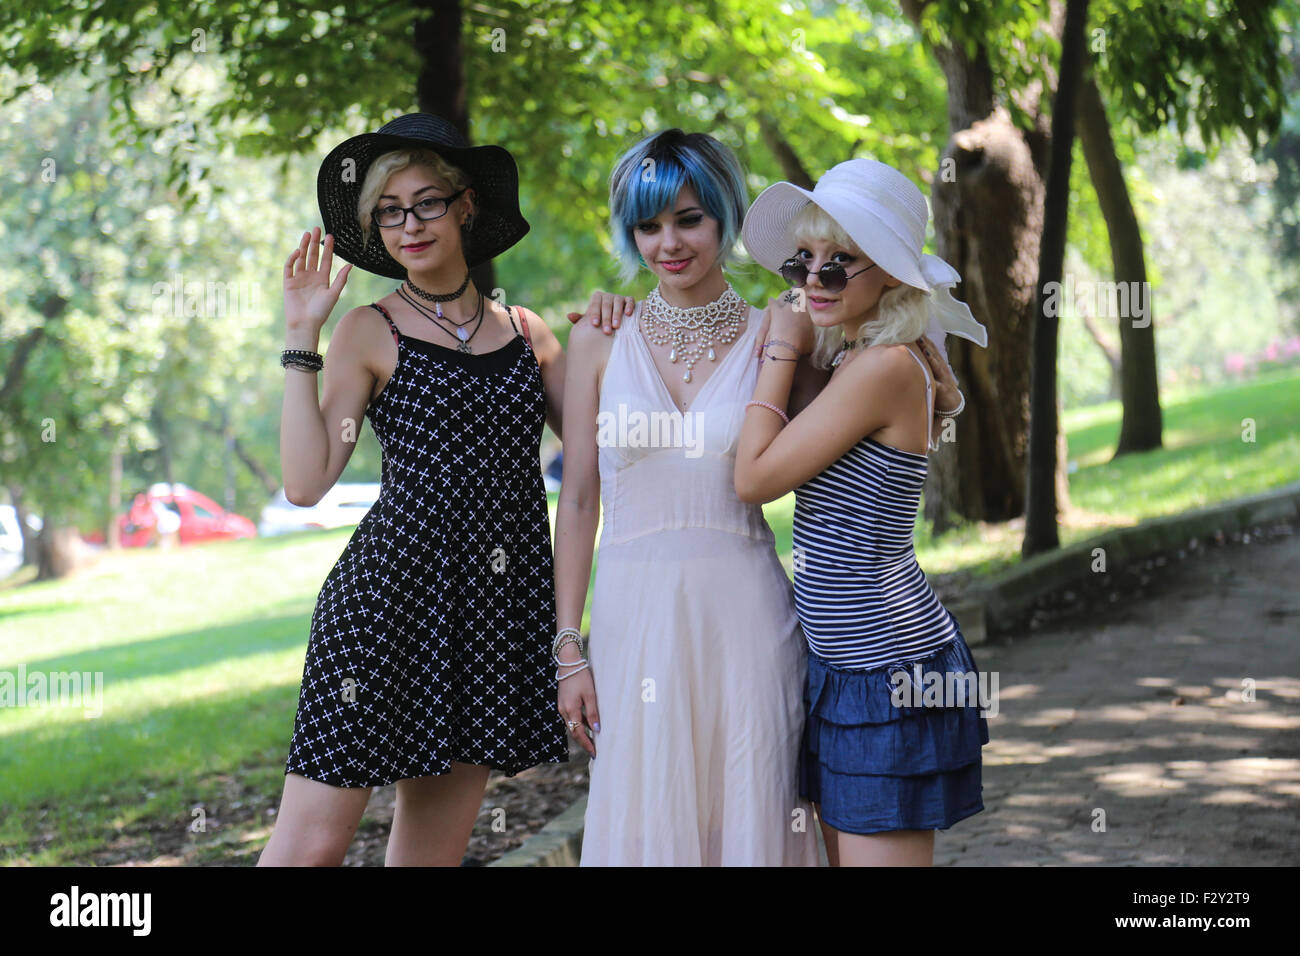 ISTANBUL, TURKEY - AUGUST 16, 2015: Girls in costume during cosplay meetin in Istanbul Yildiz park Stock Photo